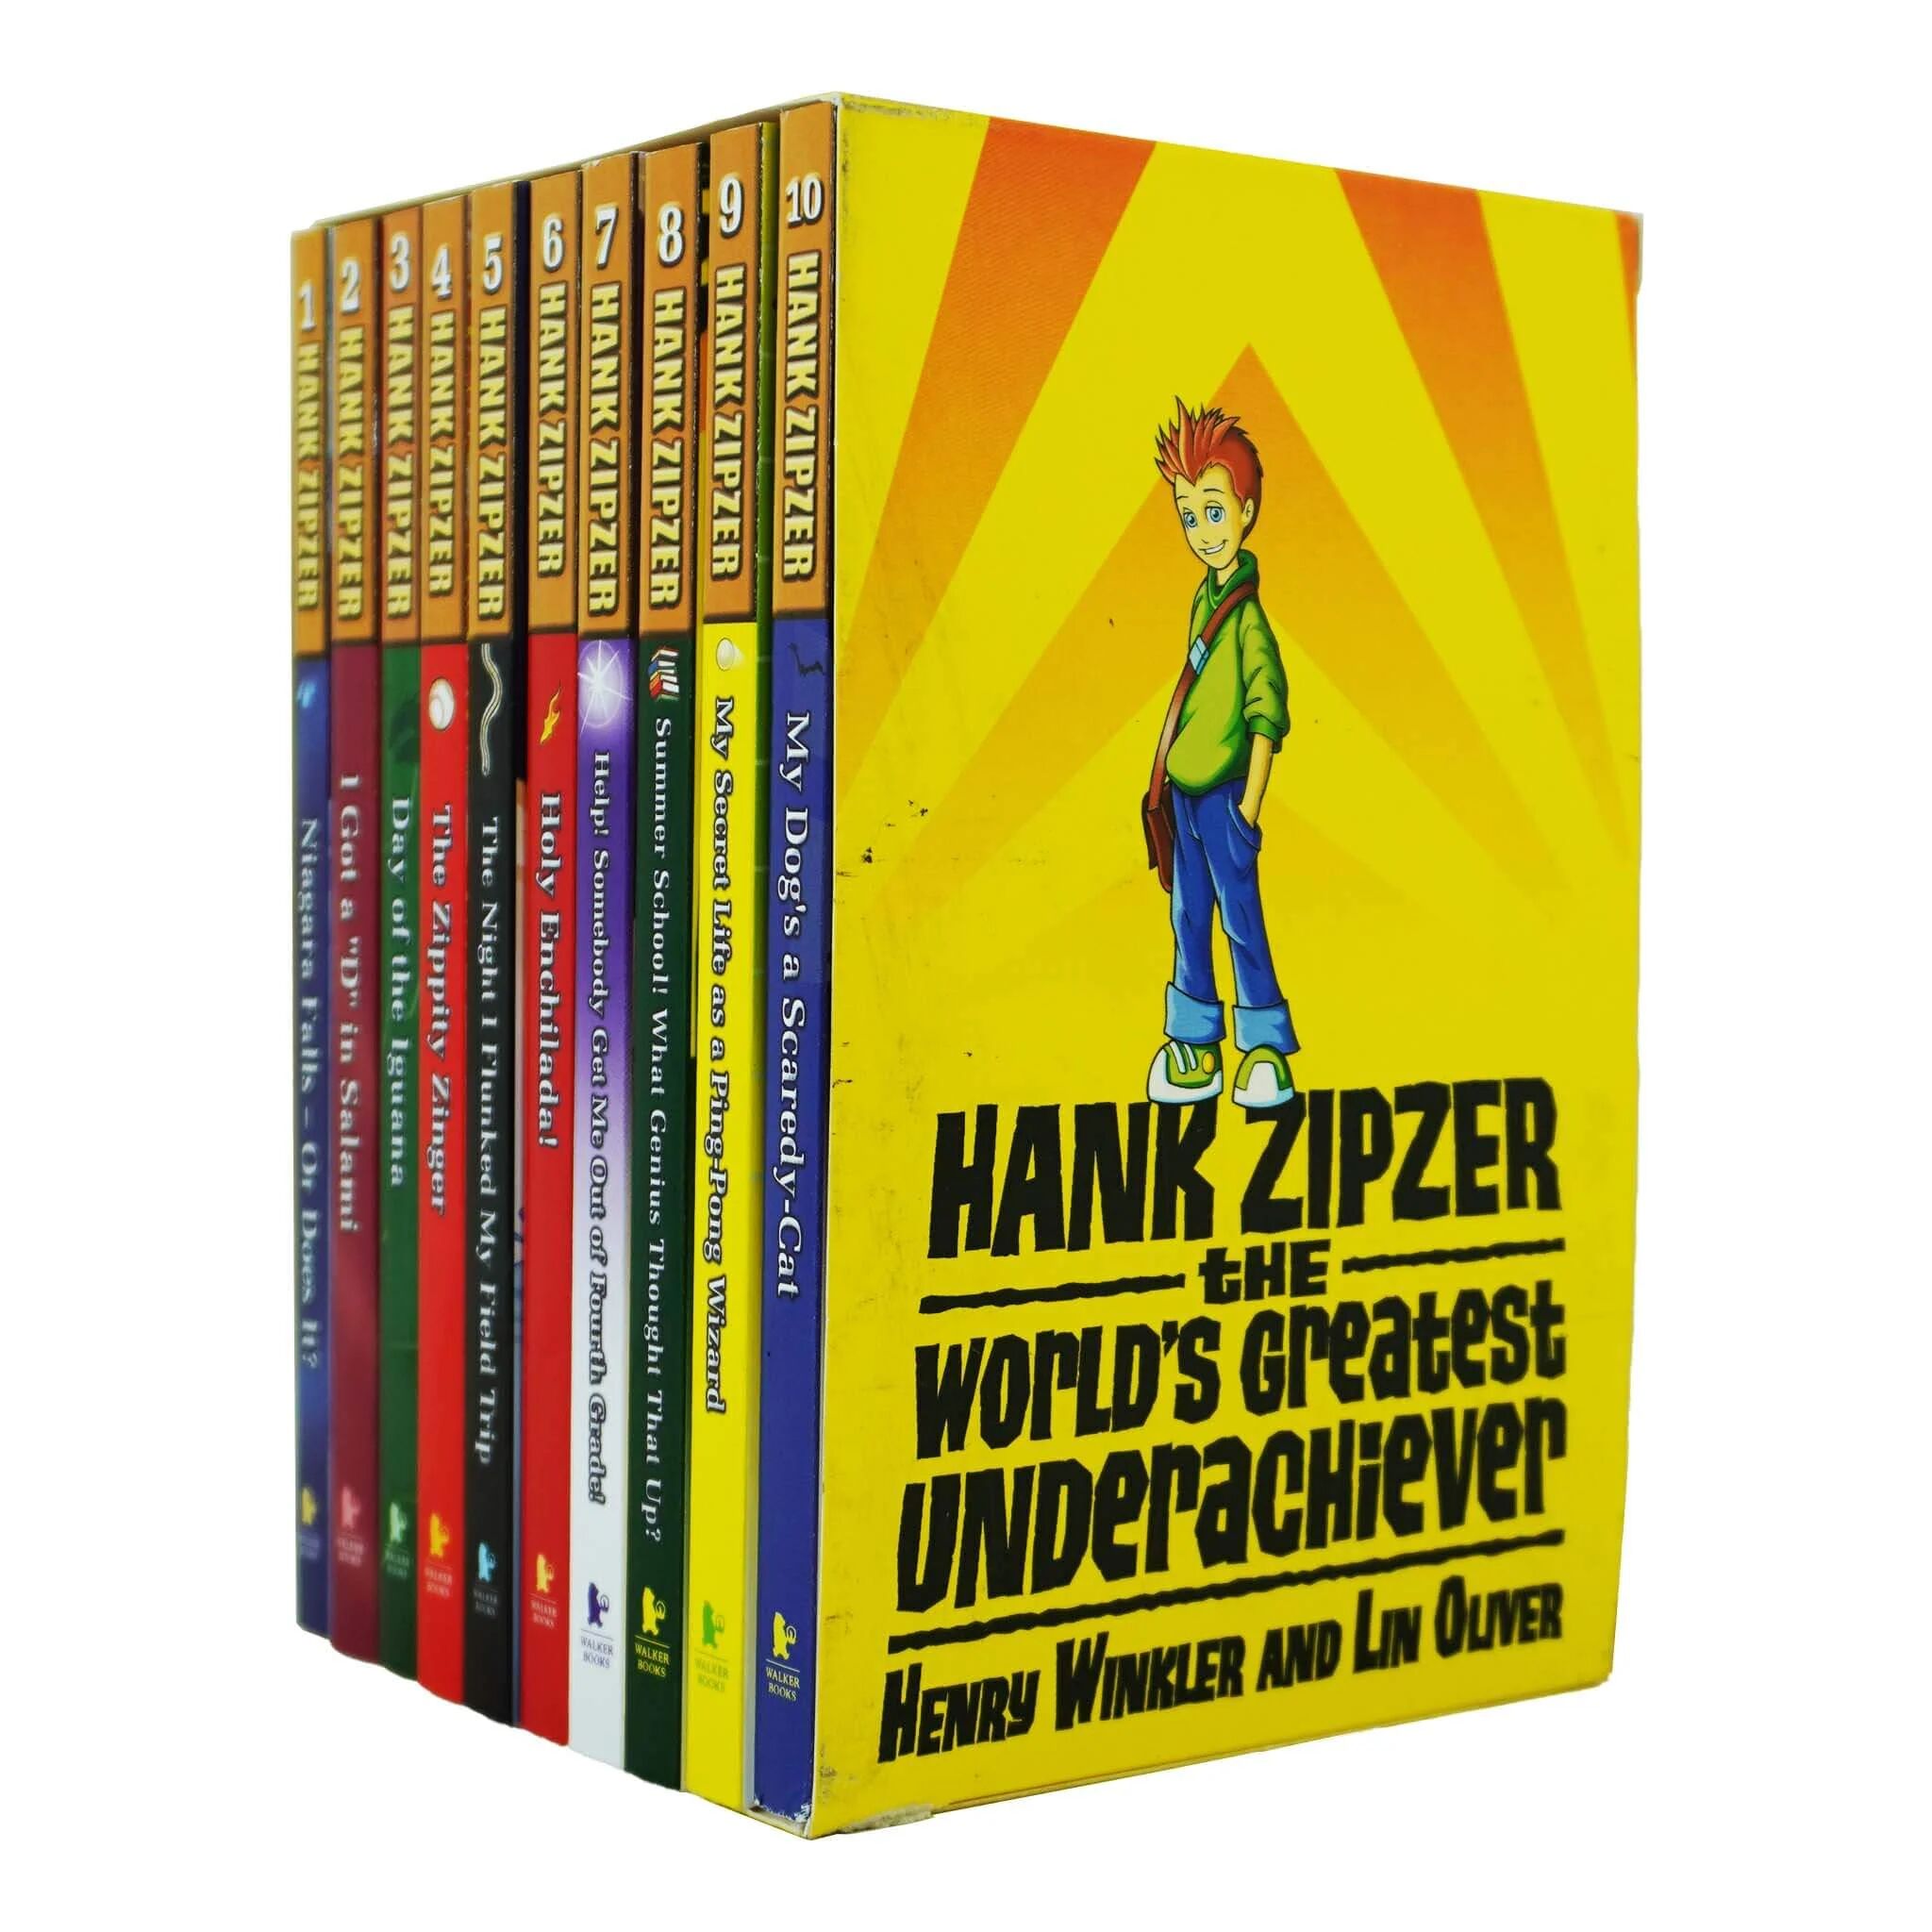 Hank Zipzer 10 Books Box Set Collection by Henry Winkler and Lin Oliver - Ages 7-9 - Paperback Walker Books Ltd